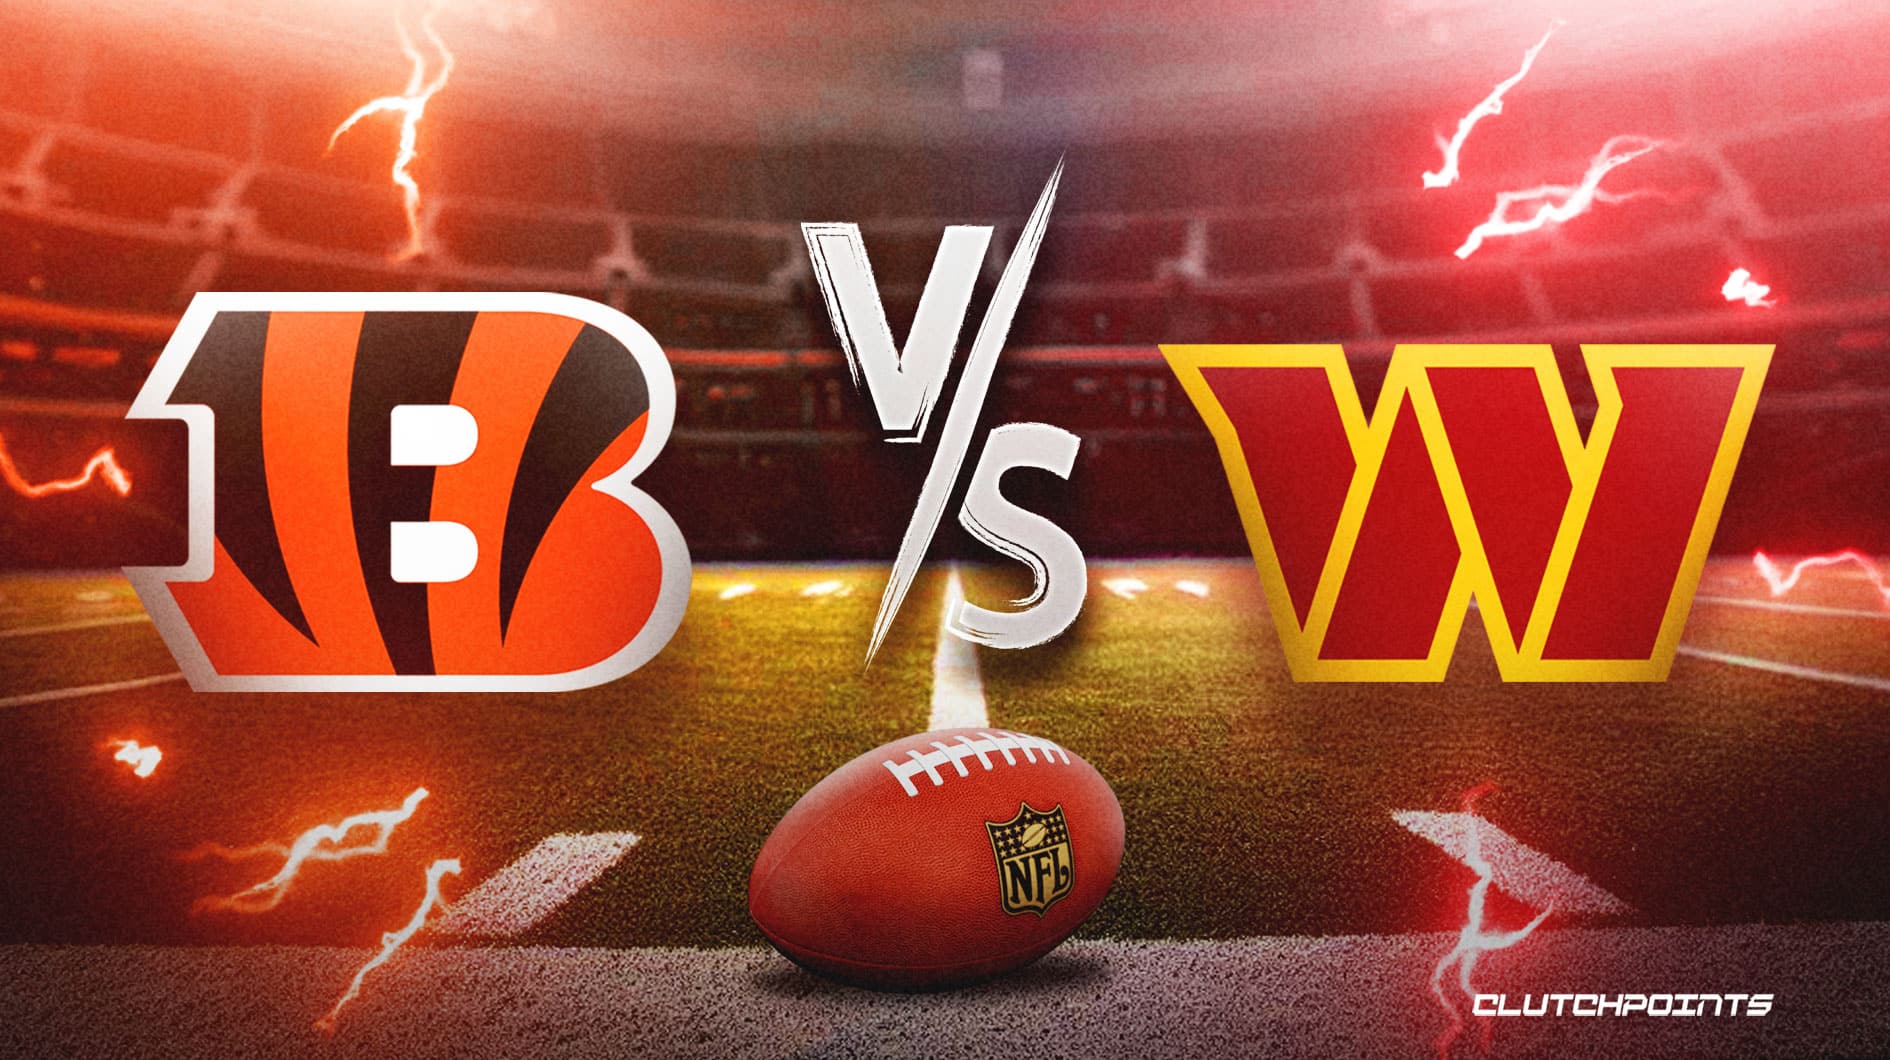 How To Watch Bengals vs. Falcons Preseason Game: TV, Betting Info